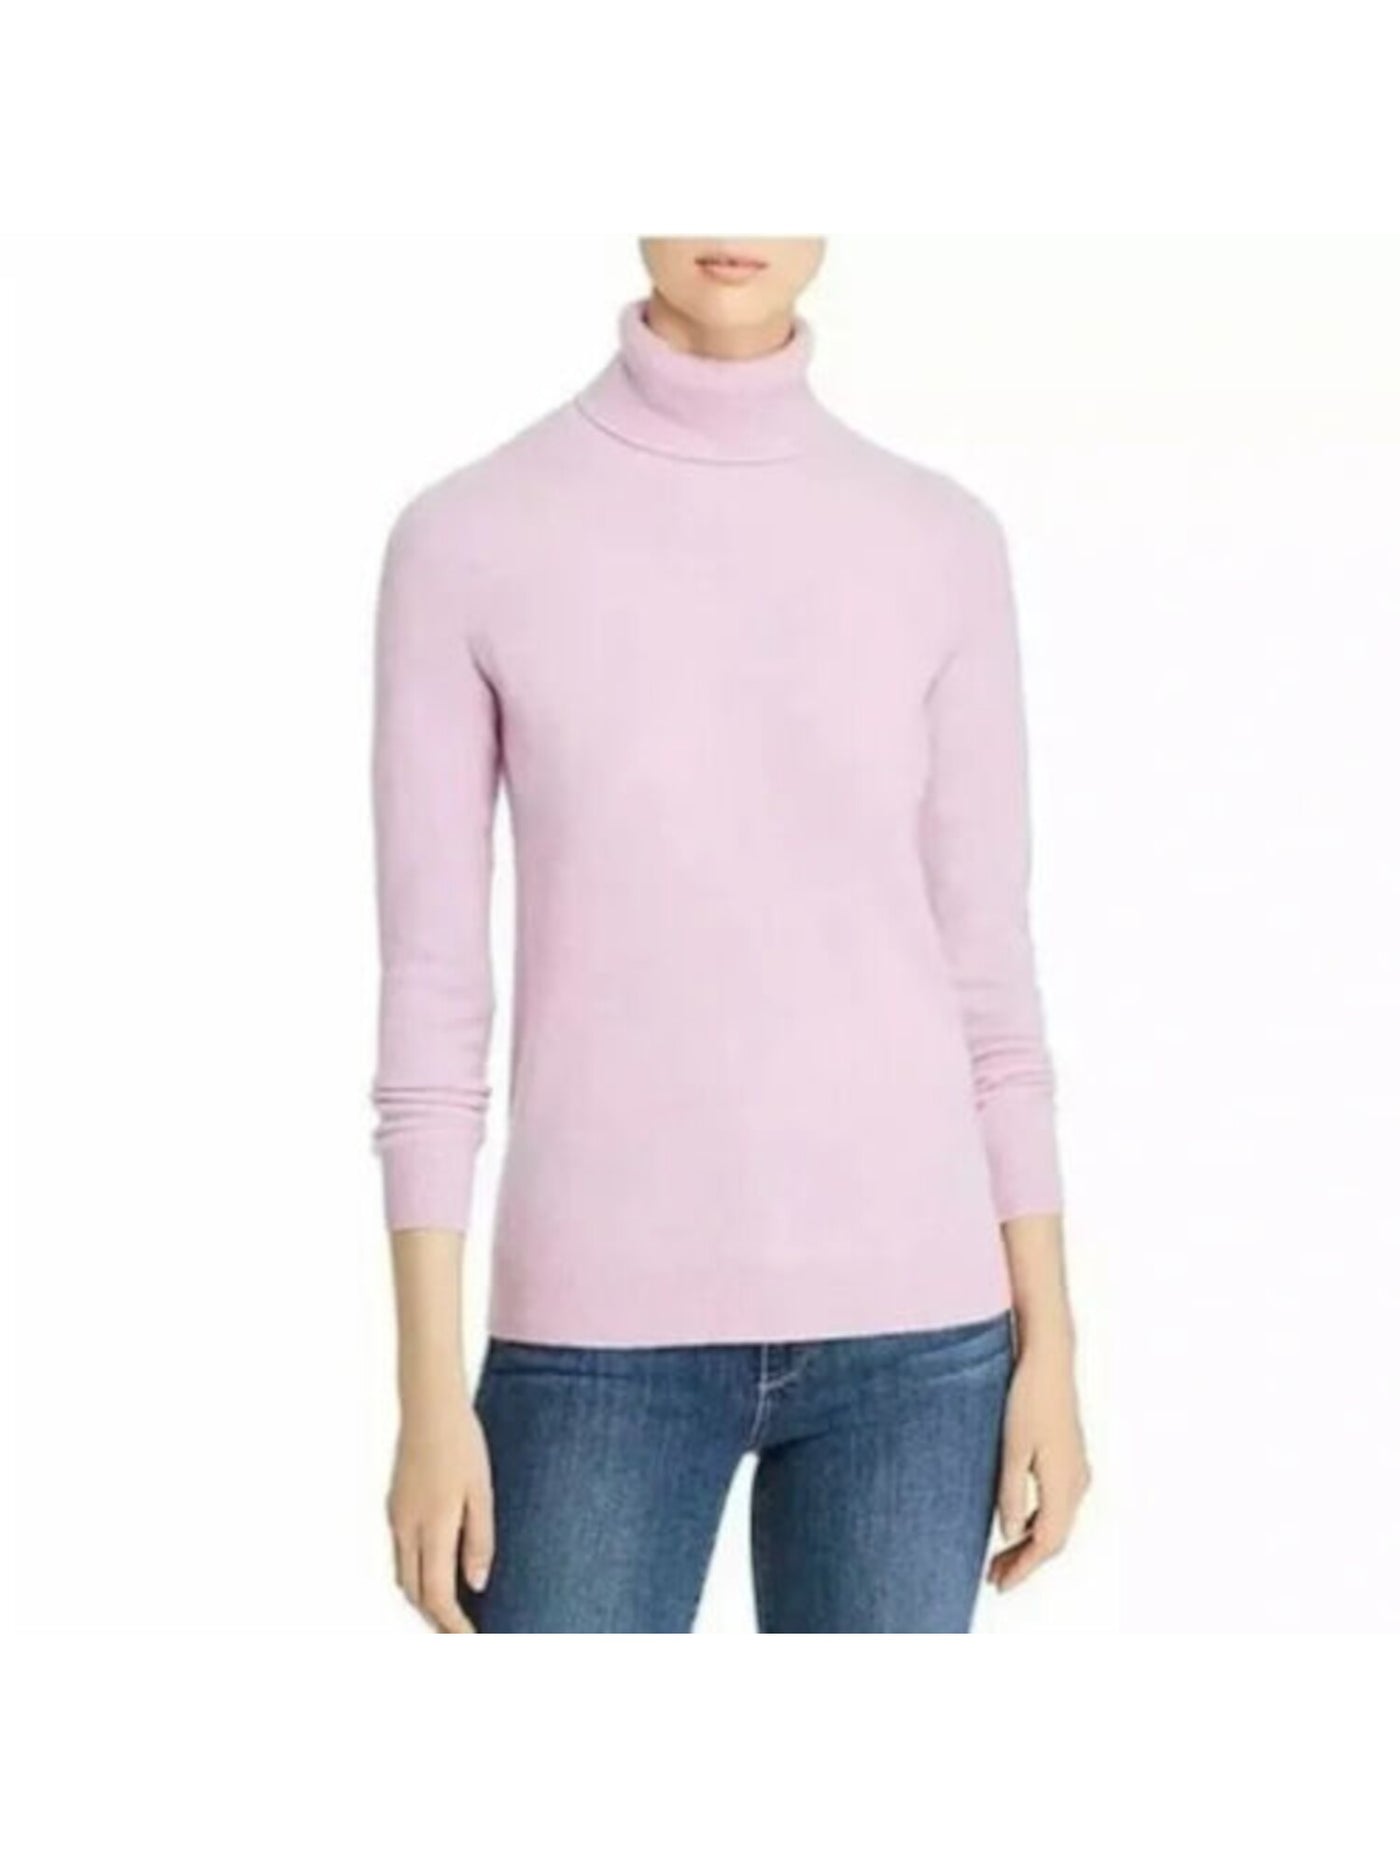 Designer Brand Womens Cashmere Long Sleeve Turtle Neck Sweater